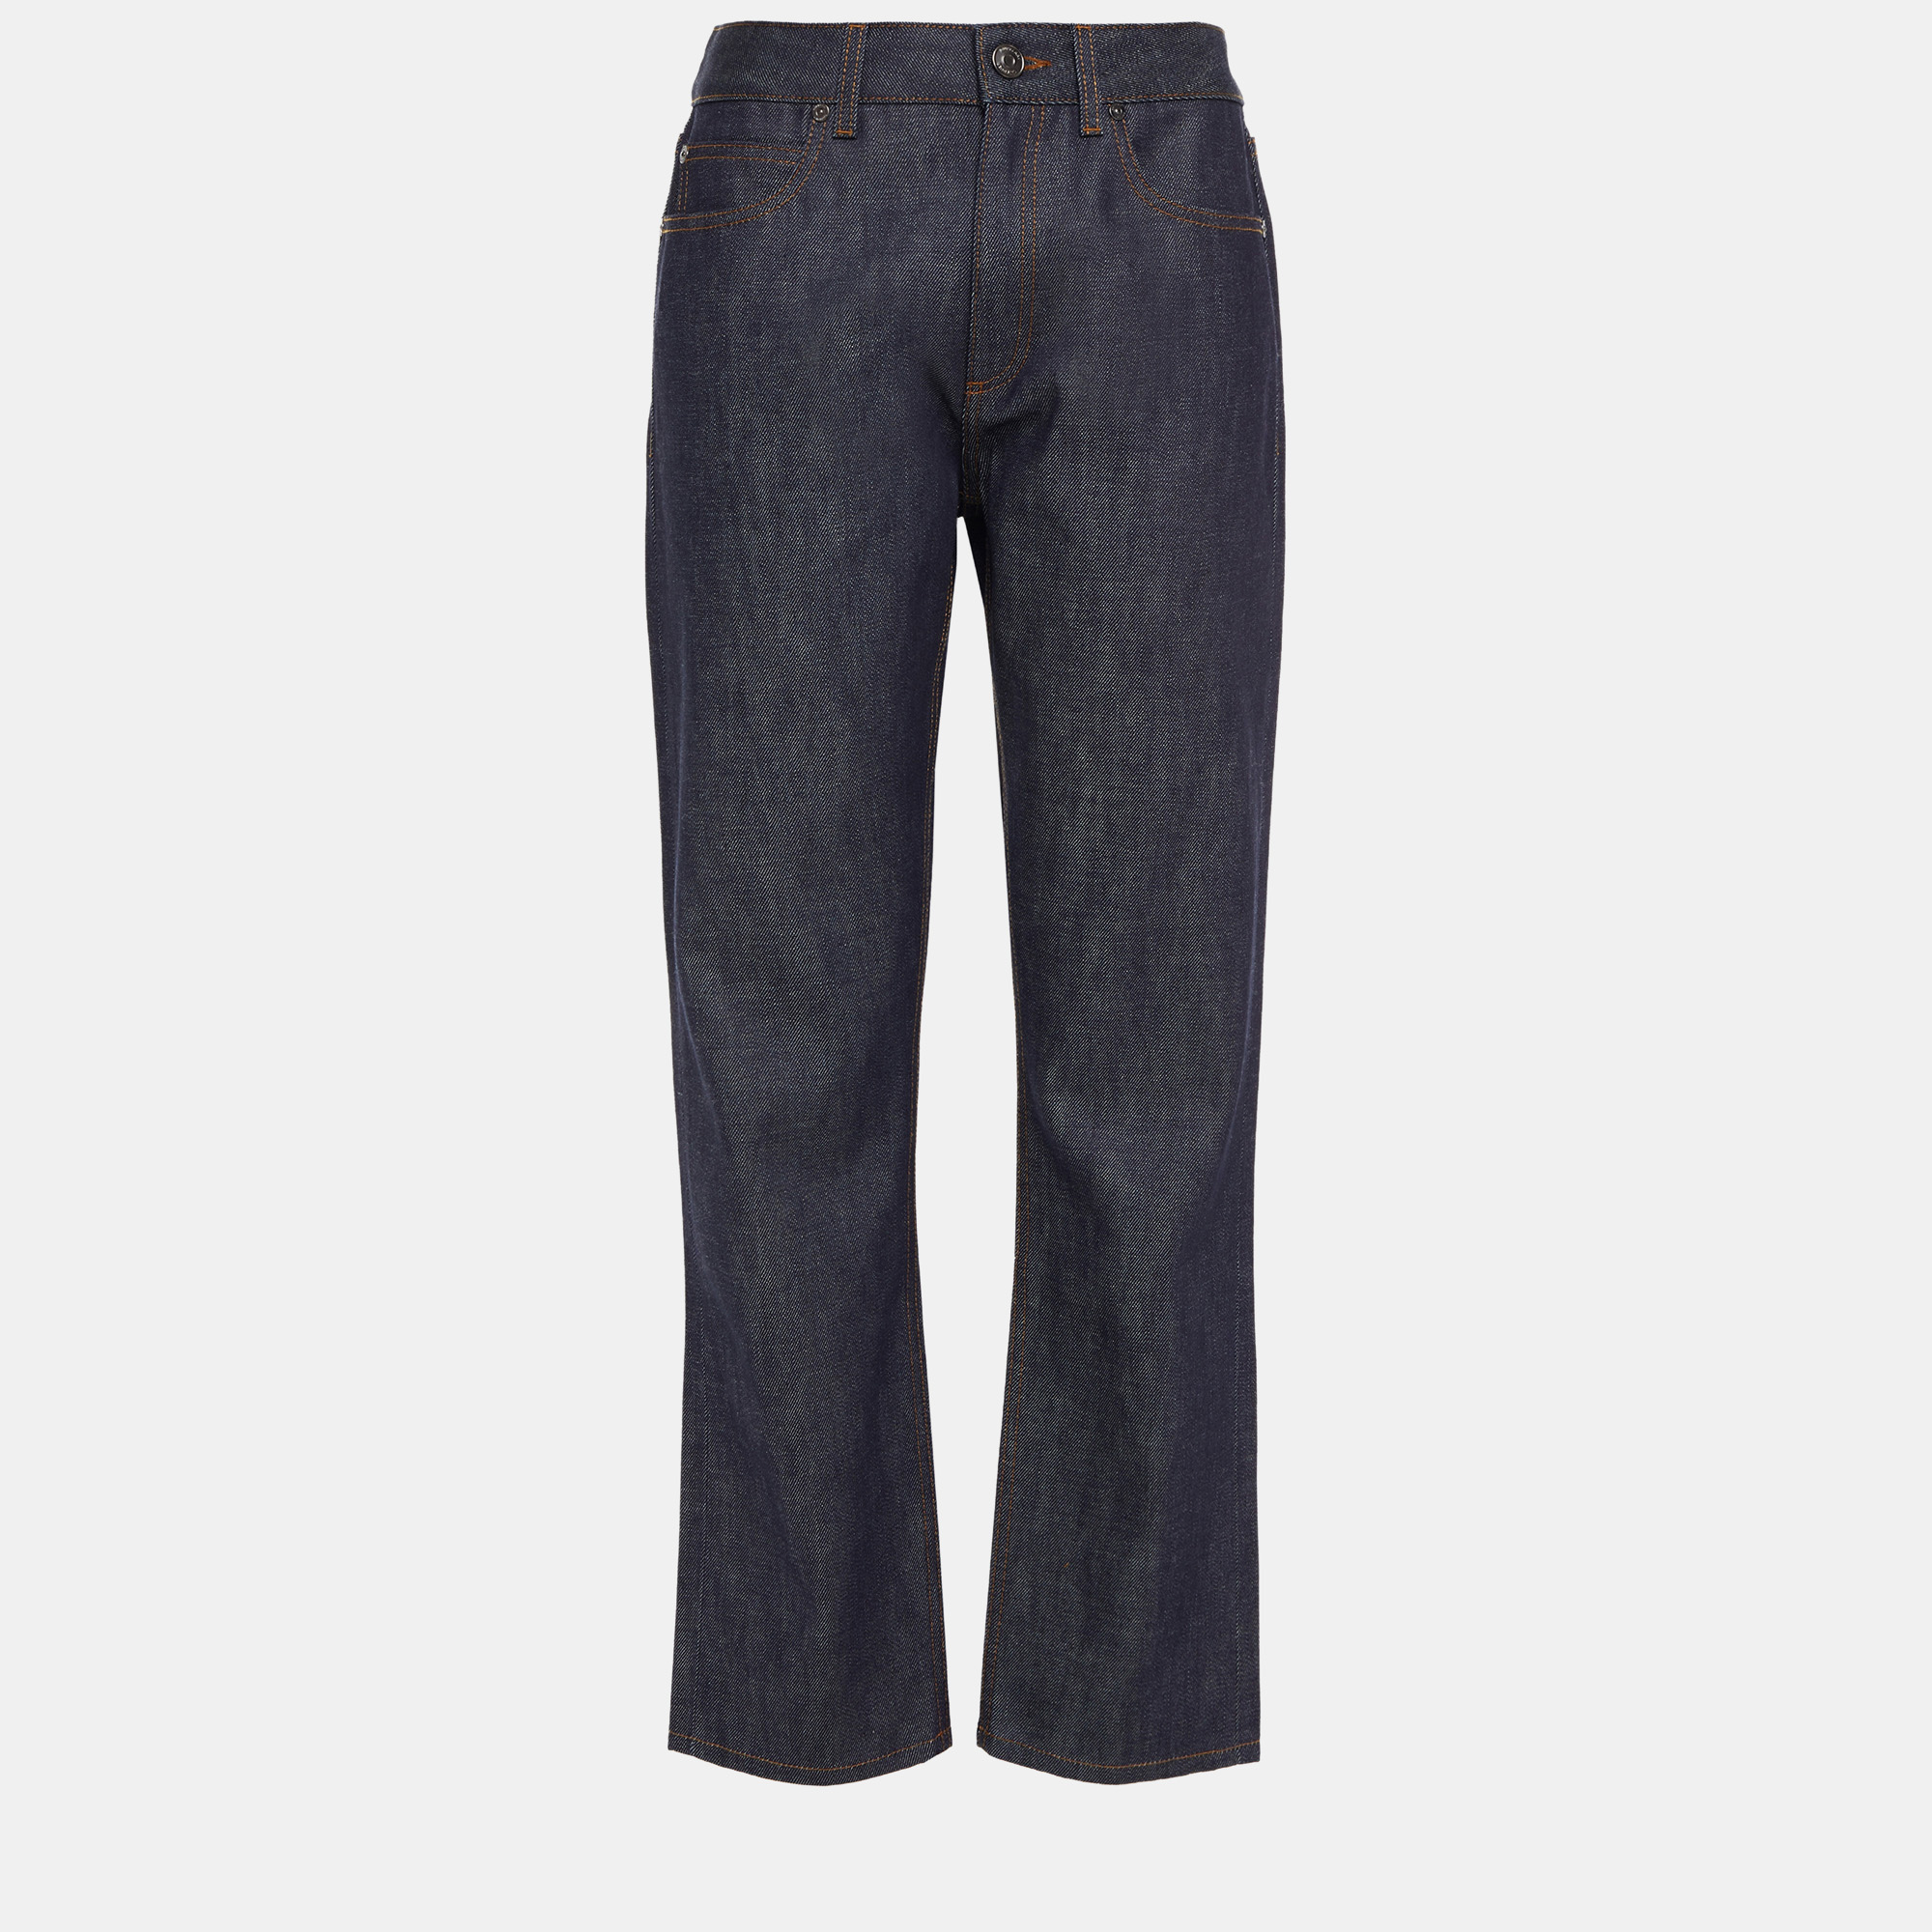 Burberry cotton straight leg jeans 29